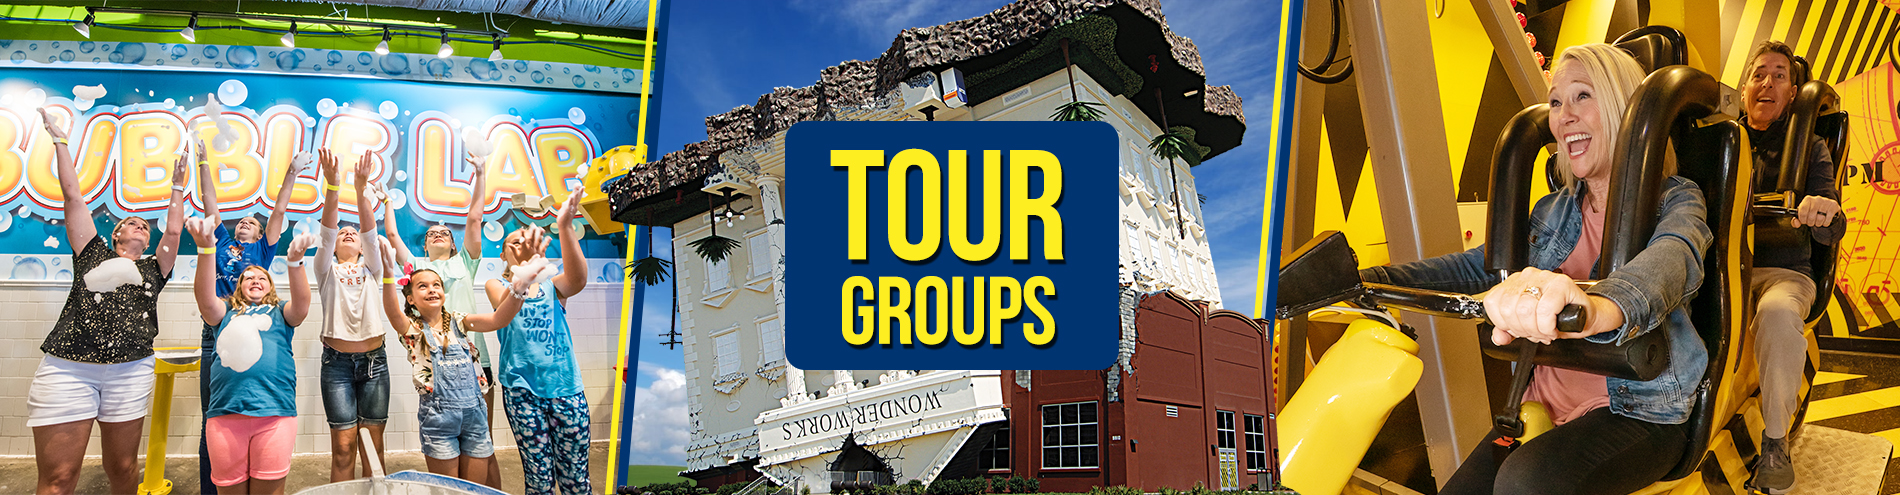 Tour Groups Header